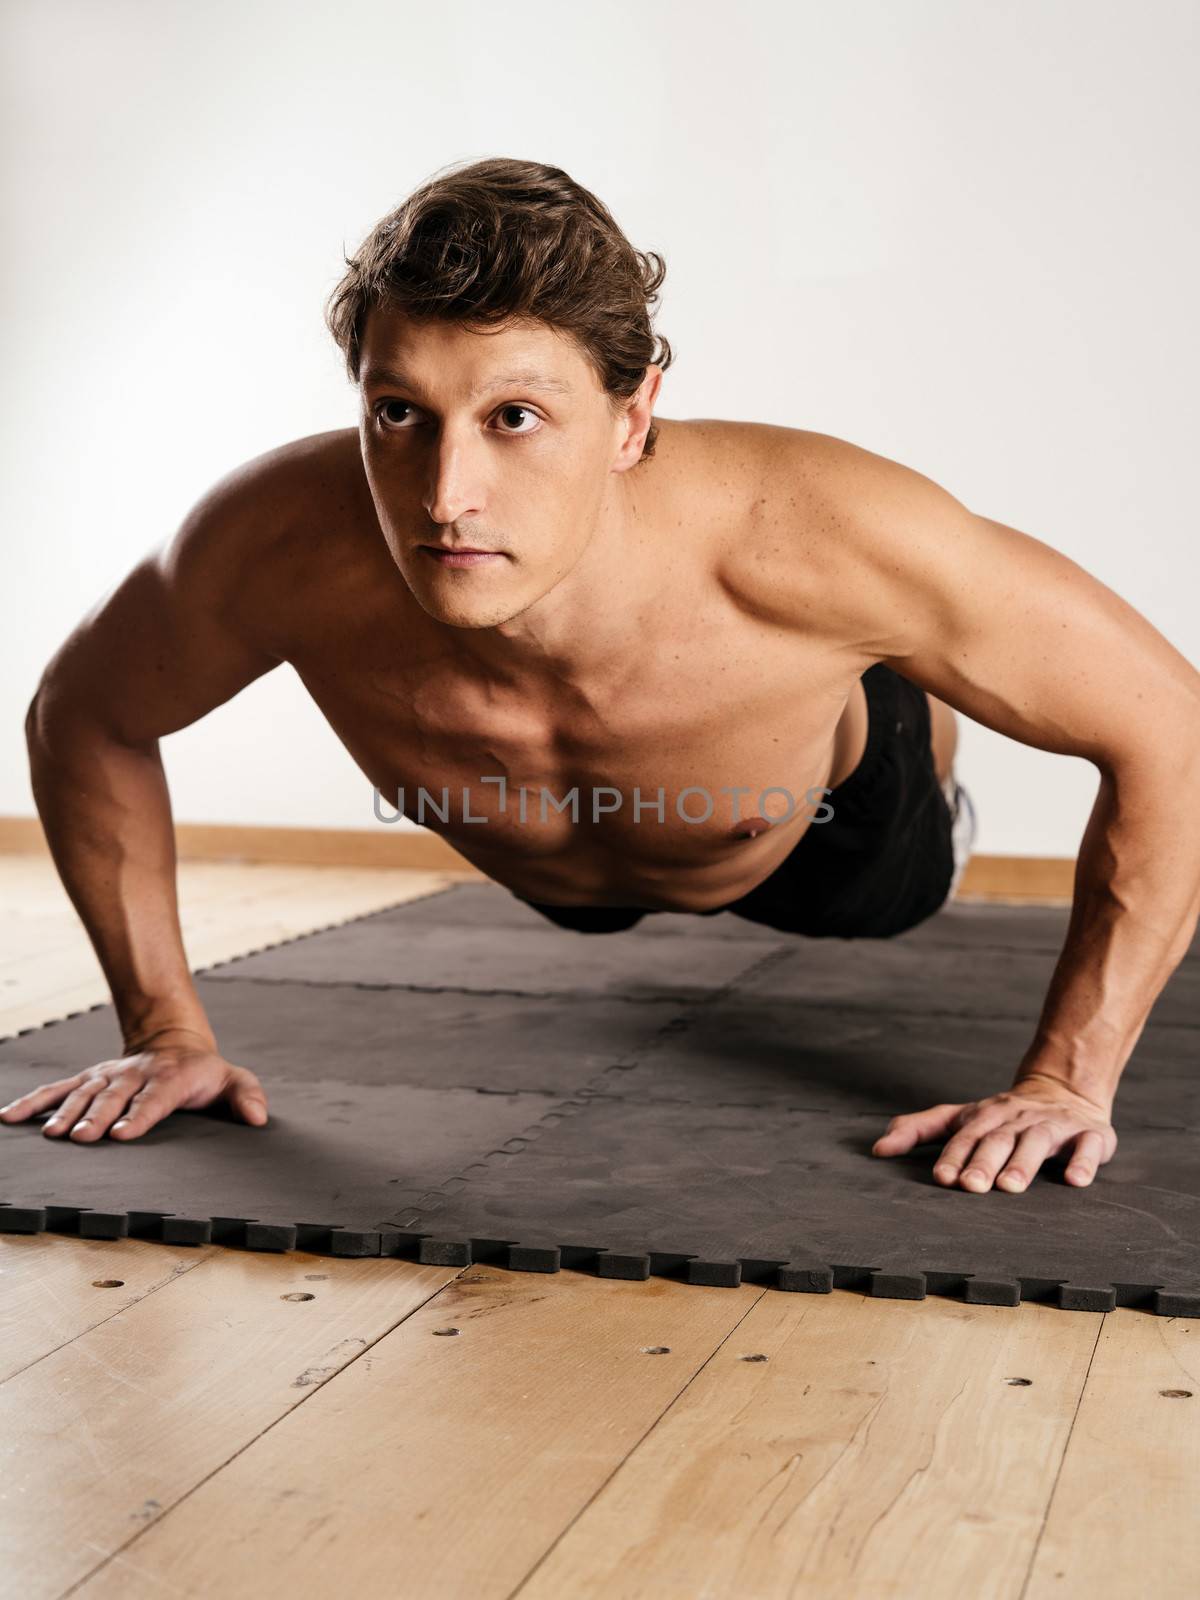 Man doing pushups by sumners